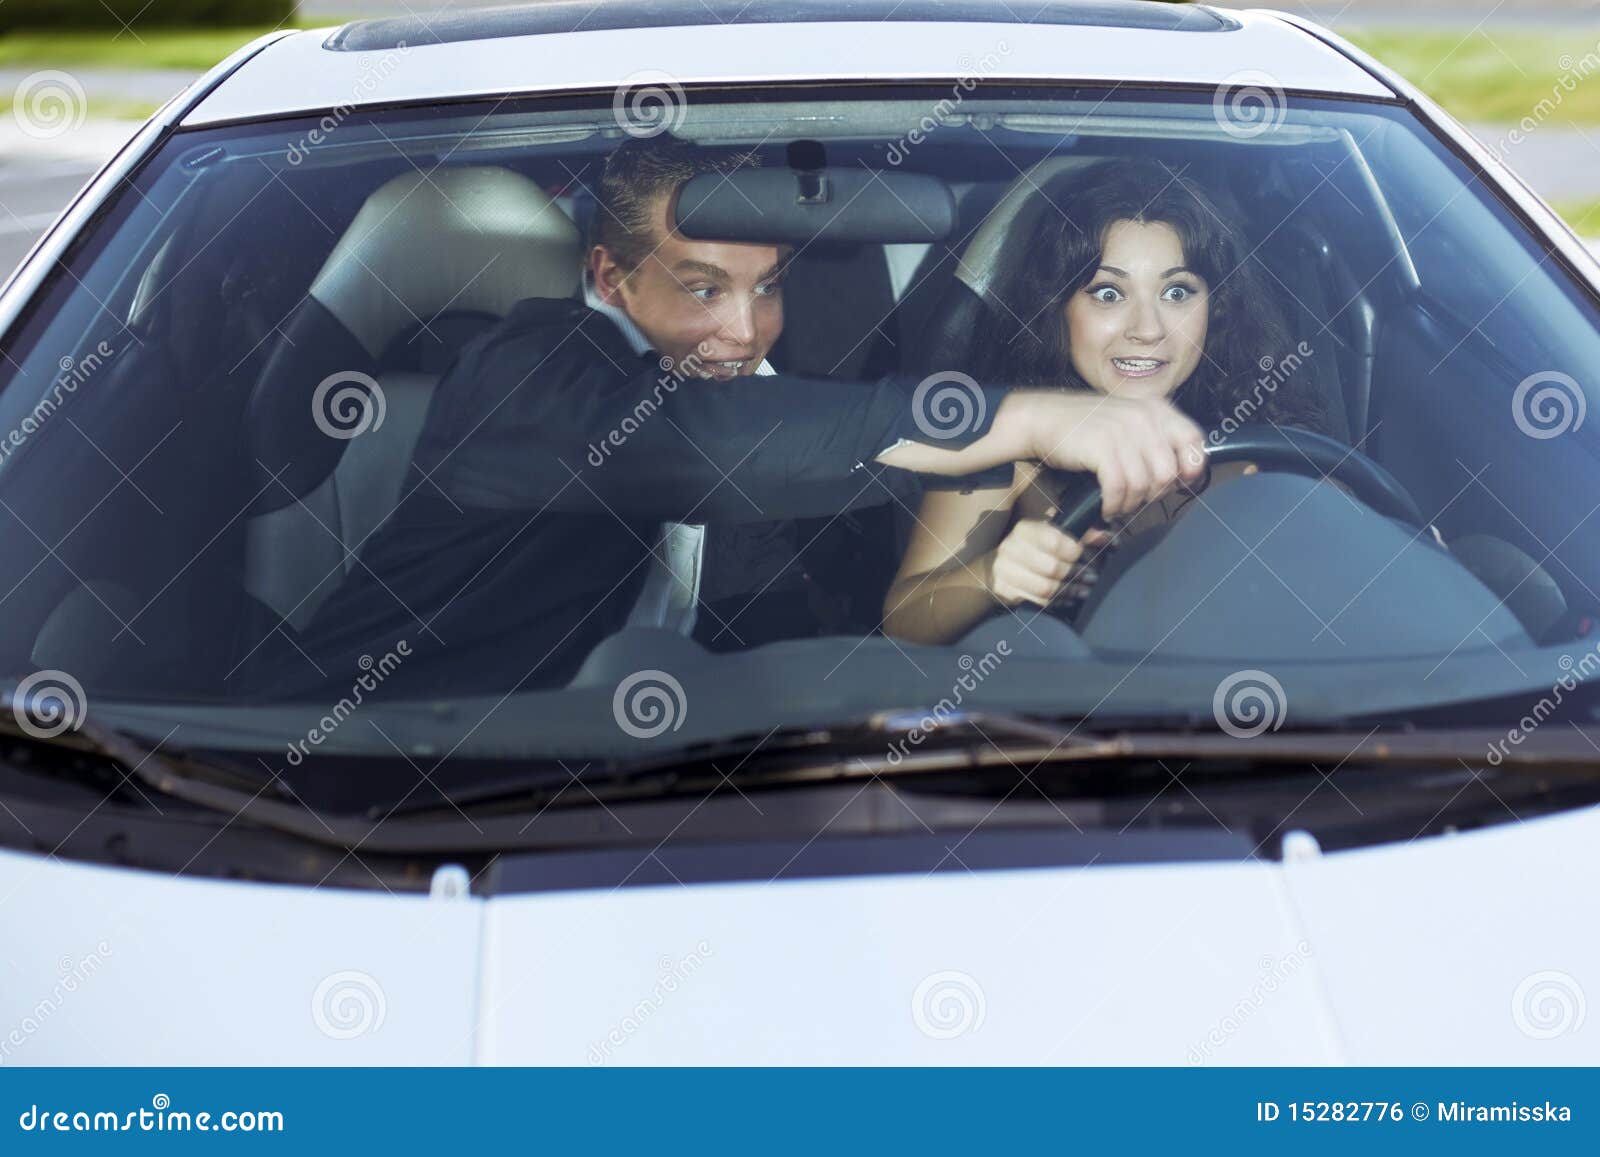 family quarrel driving